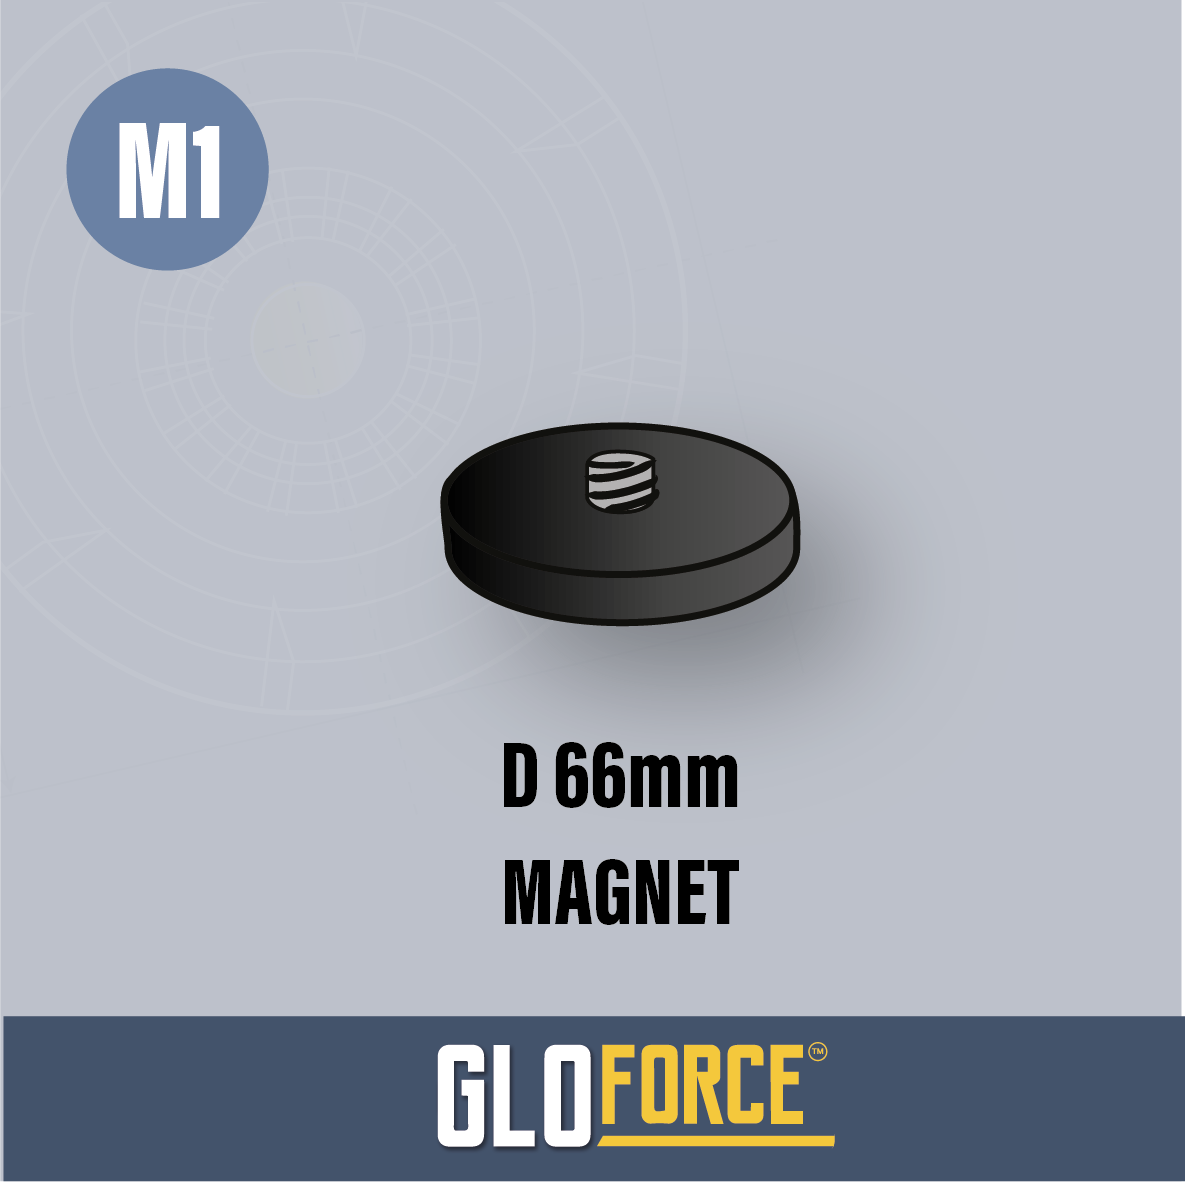 M1-MAGNET 66mm